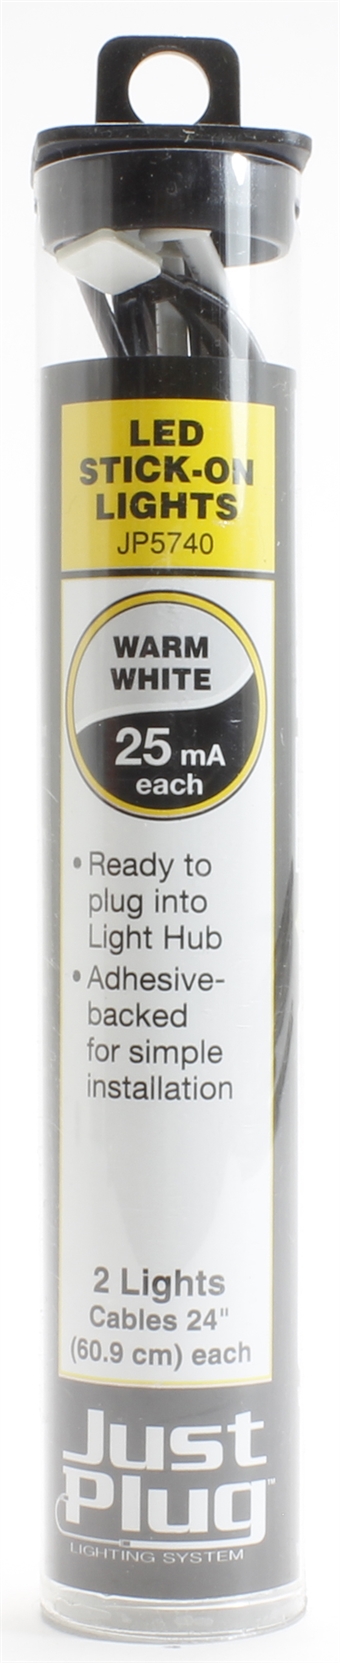 Warm white LED stick-on lights for Just Plug lighting system